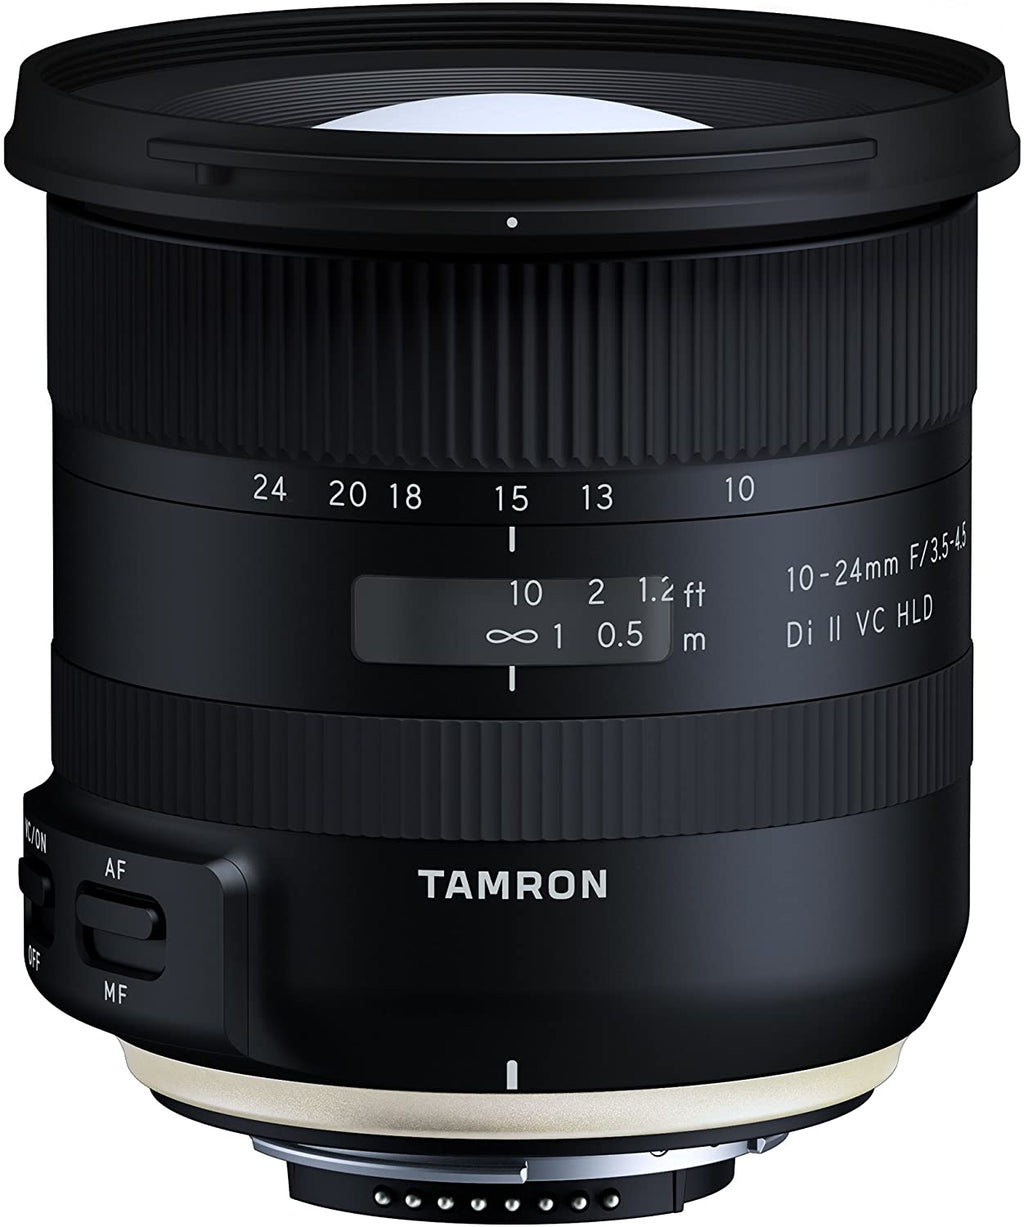 Detec™ Tamron exchange lens 10-24mm F3.5-4.5 Di II VC HLD (Model B023) [Nikon F-mount